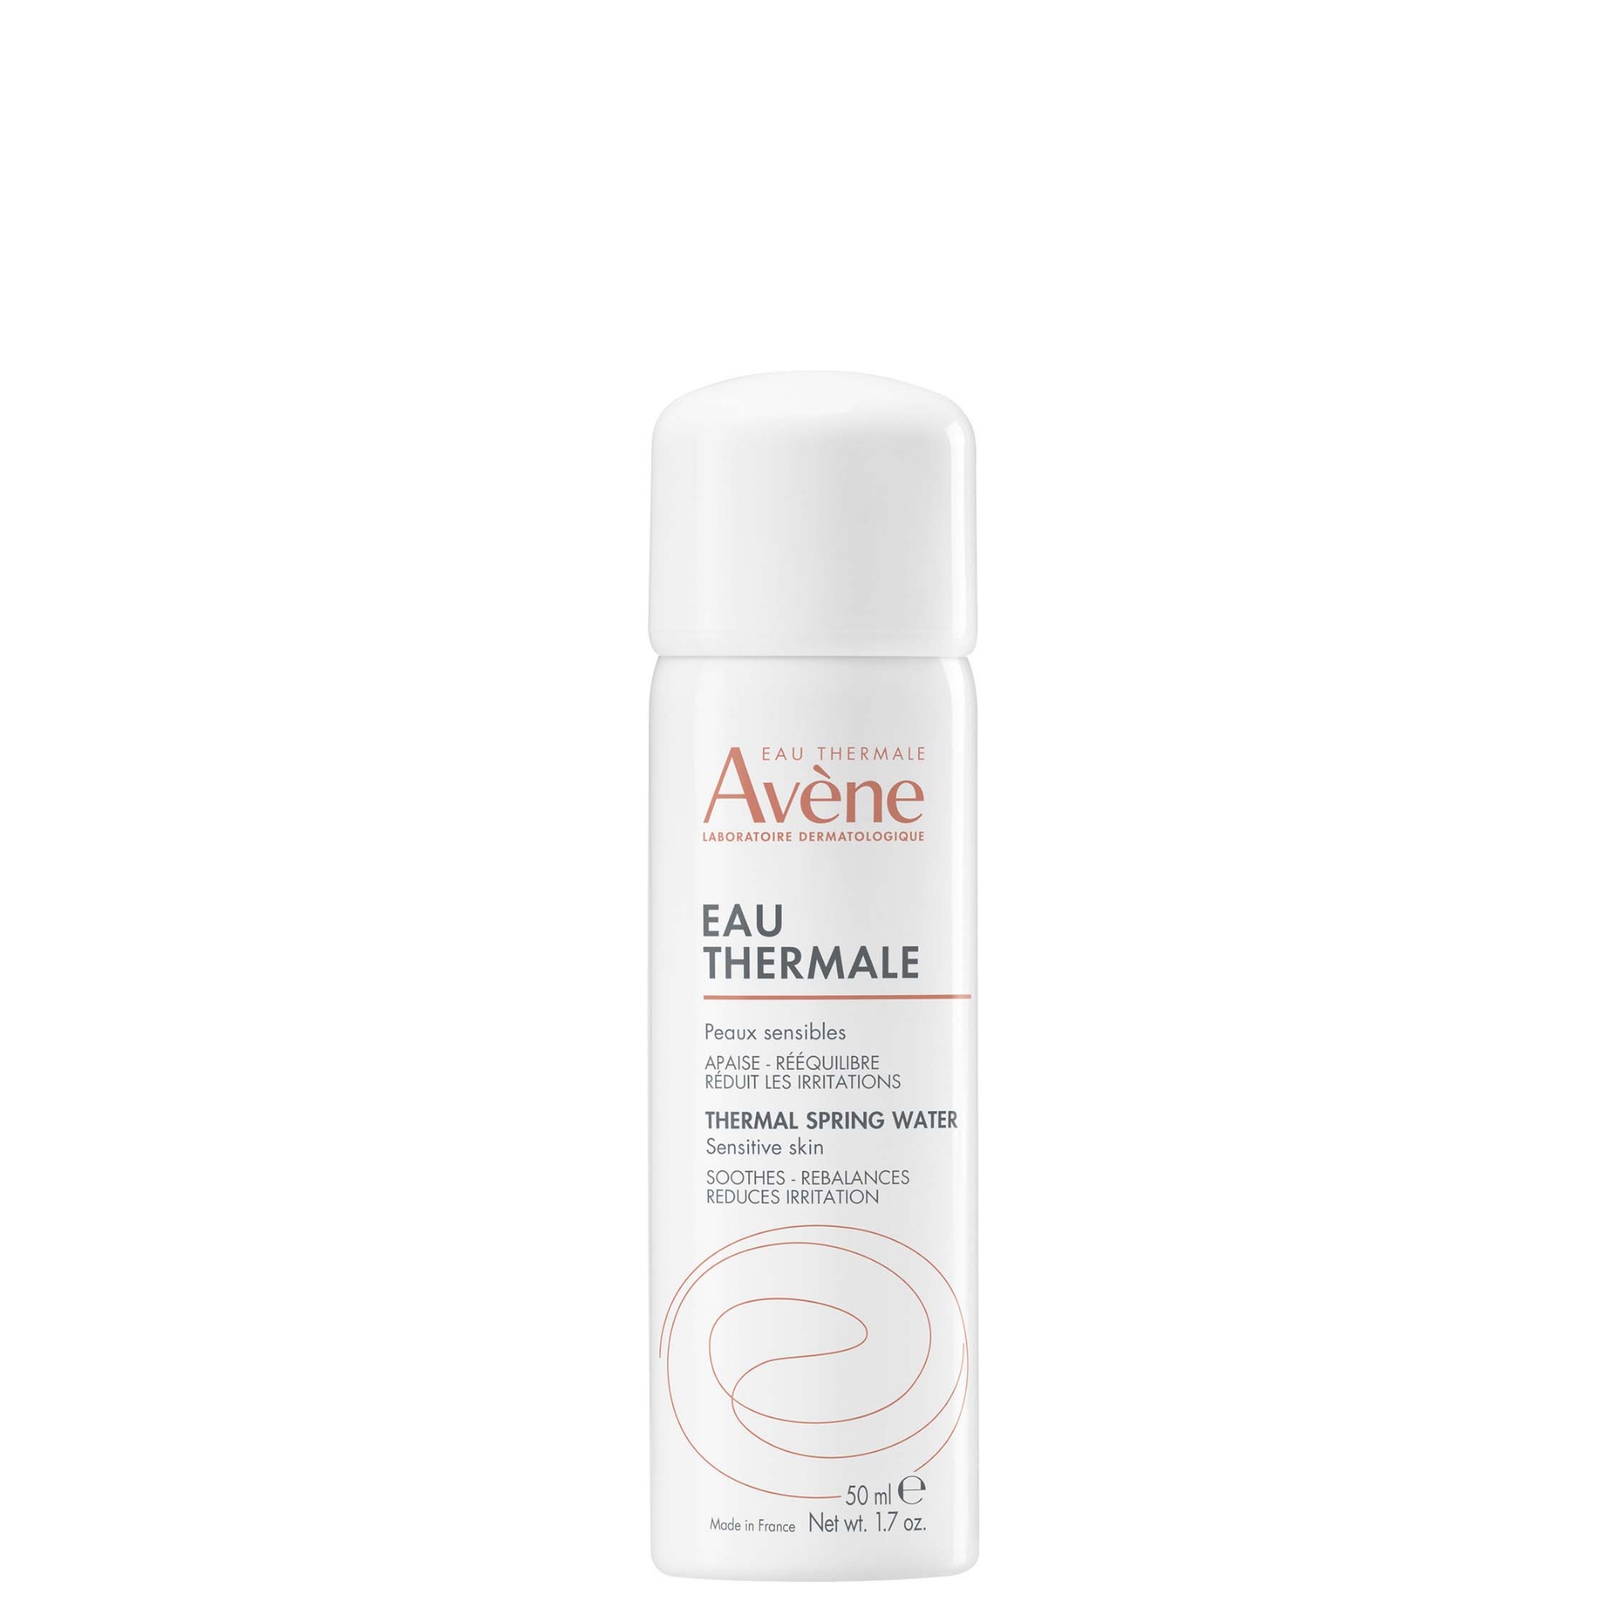 Photos - Cream / Lotion Avene Avène Thermal Spring Water Spray for Sensitive Skin 50ml 